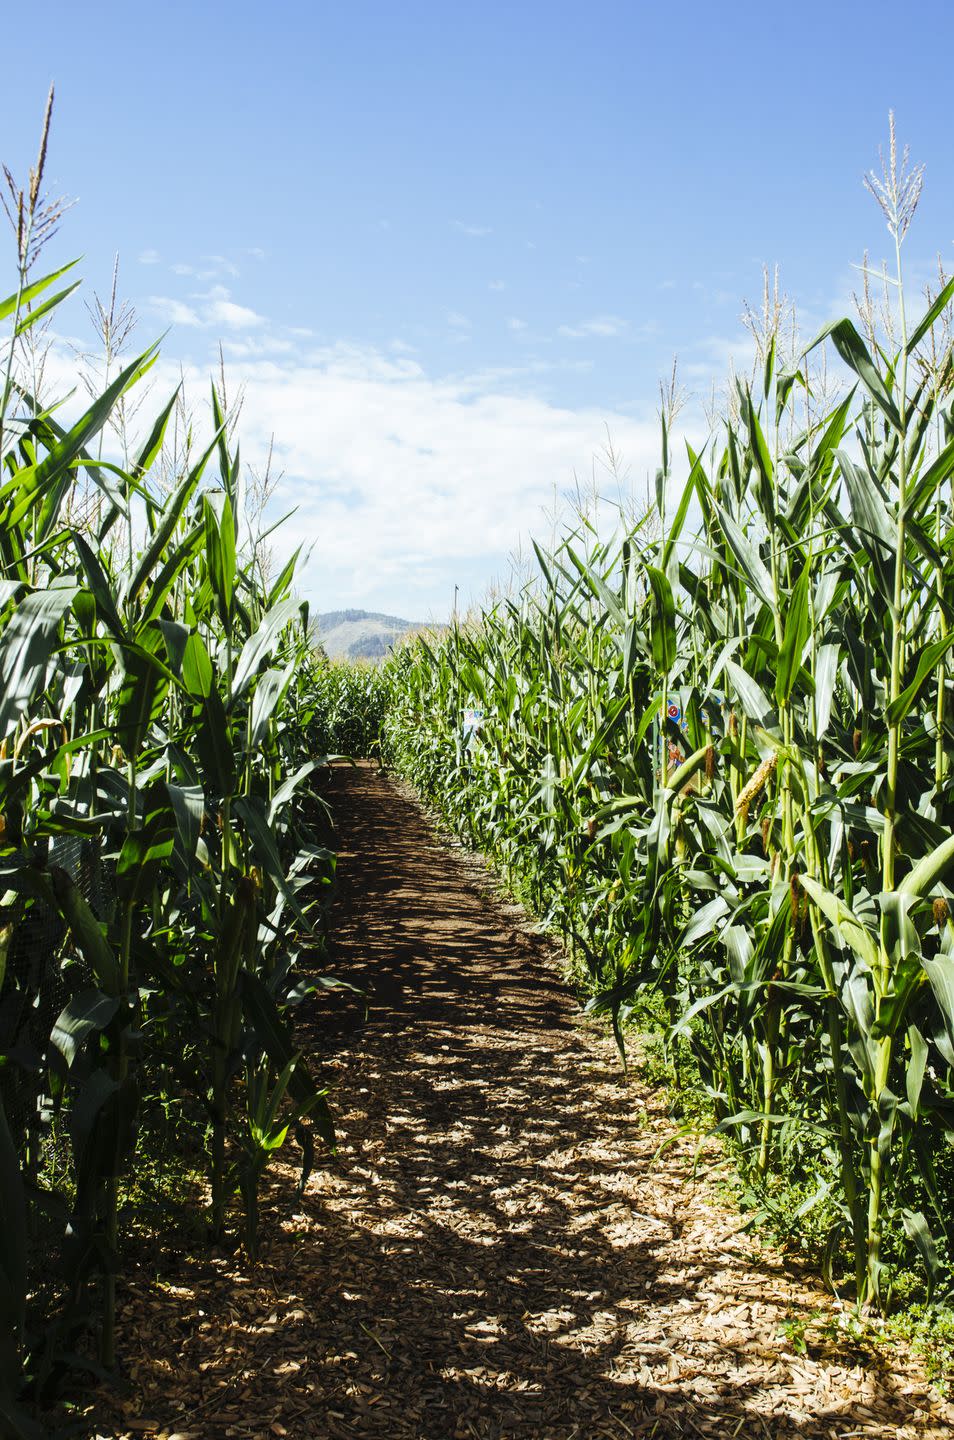 Get Lost in a Corn Maze